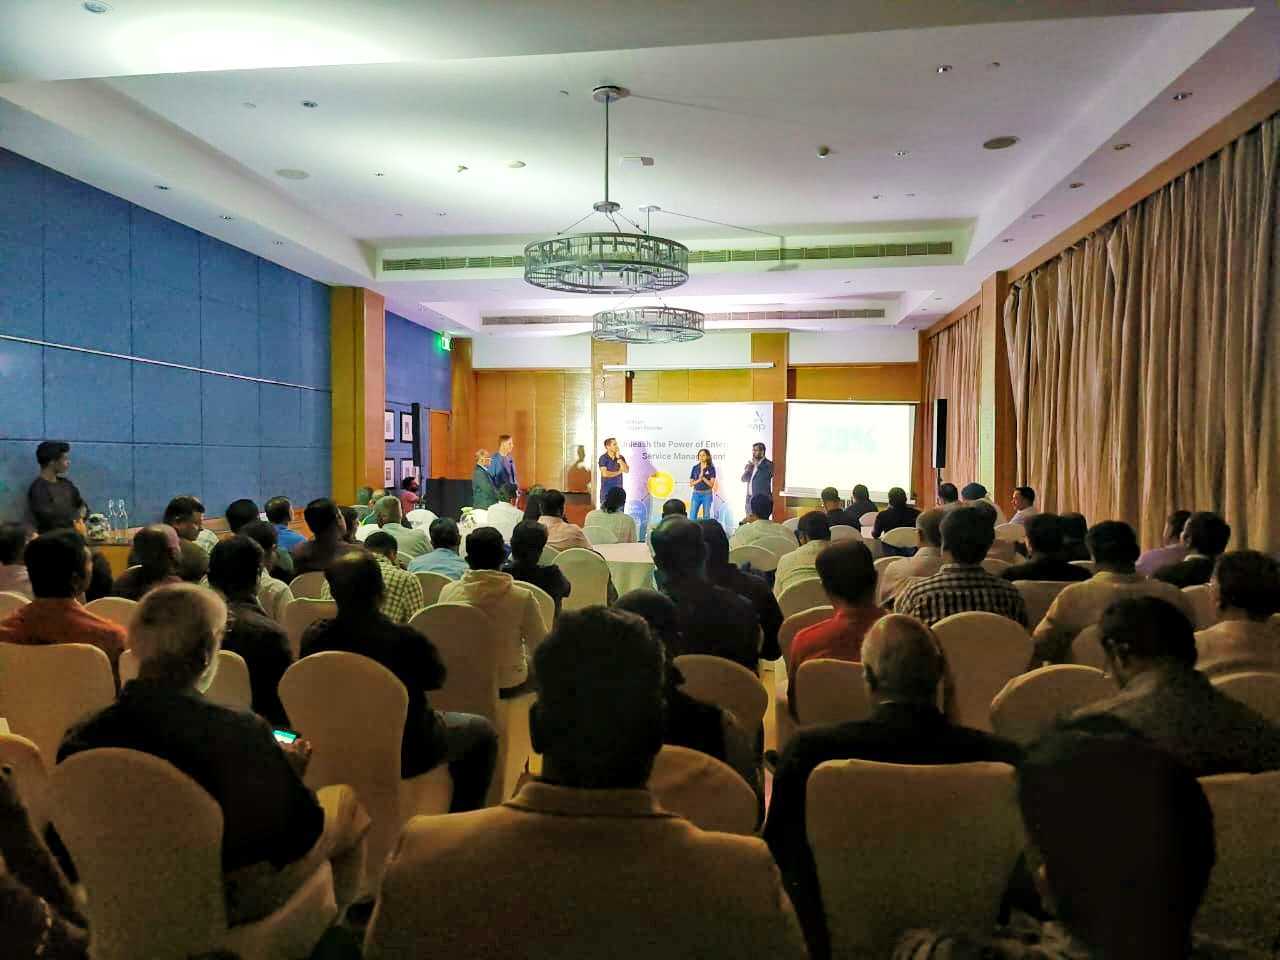 Atlassian itsm bangalore event-4